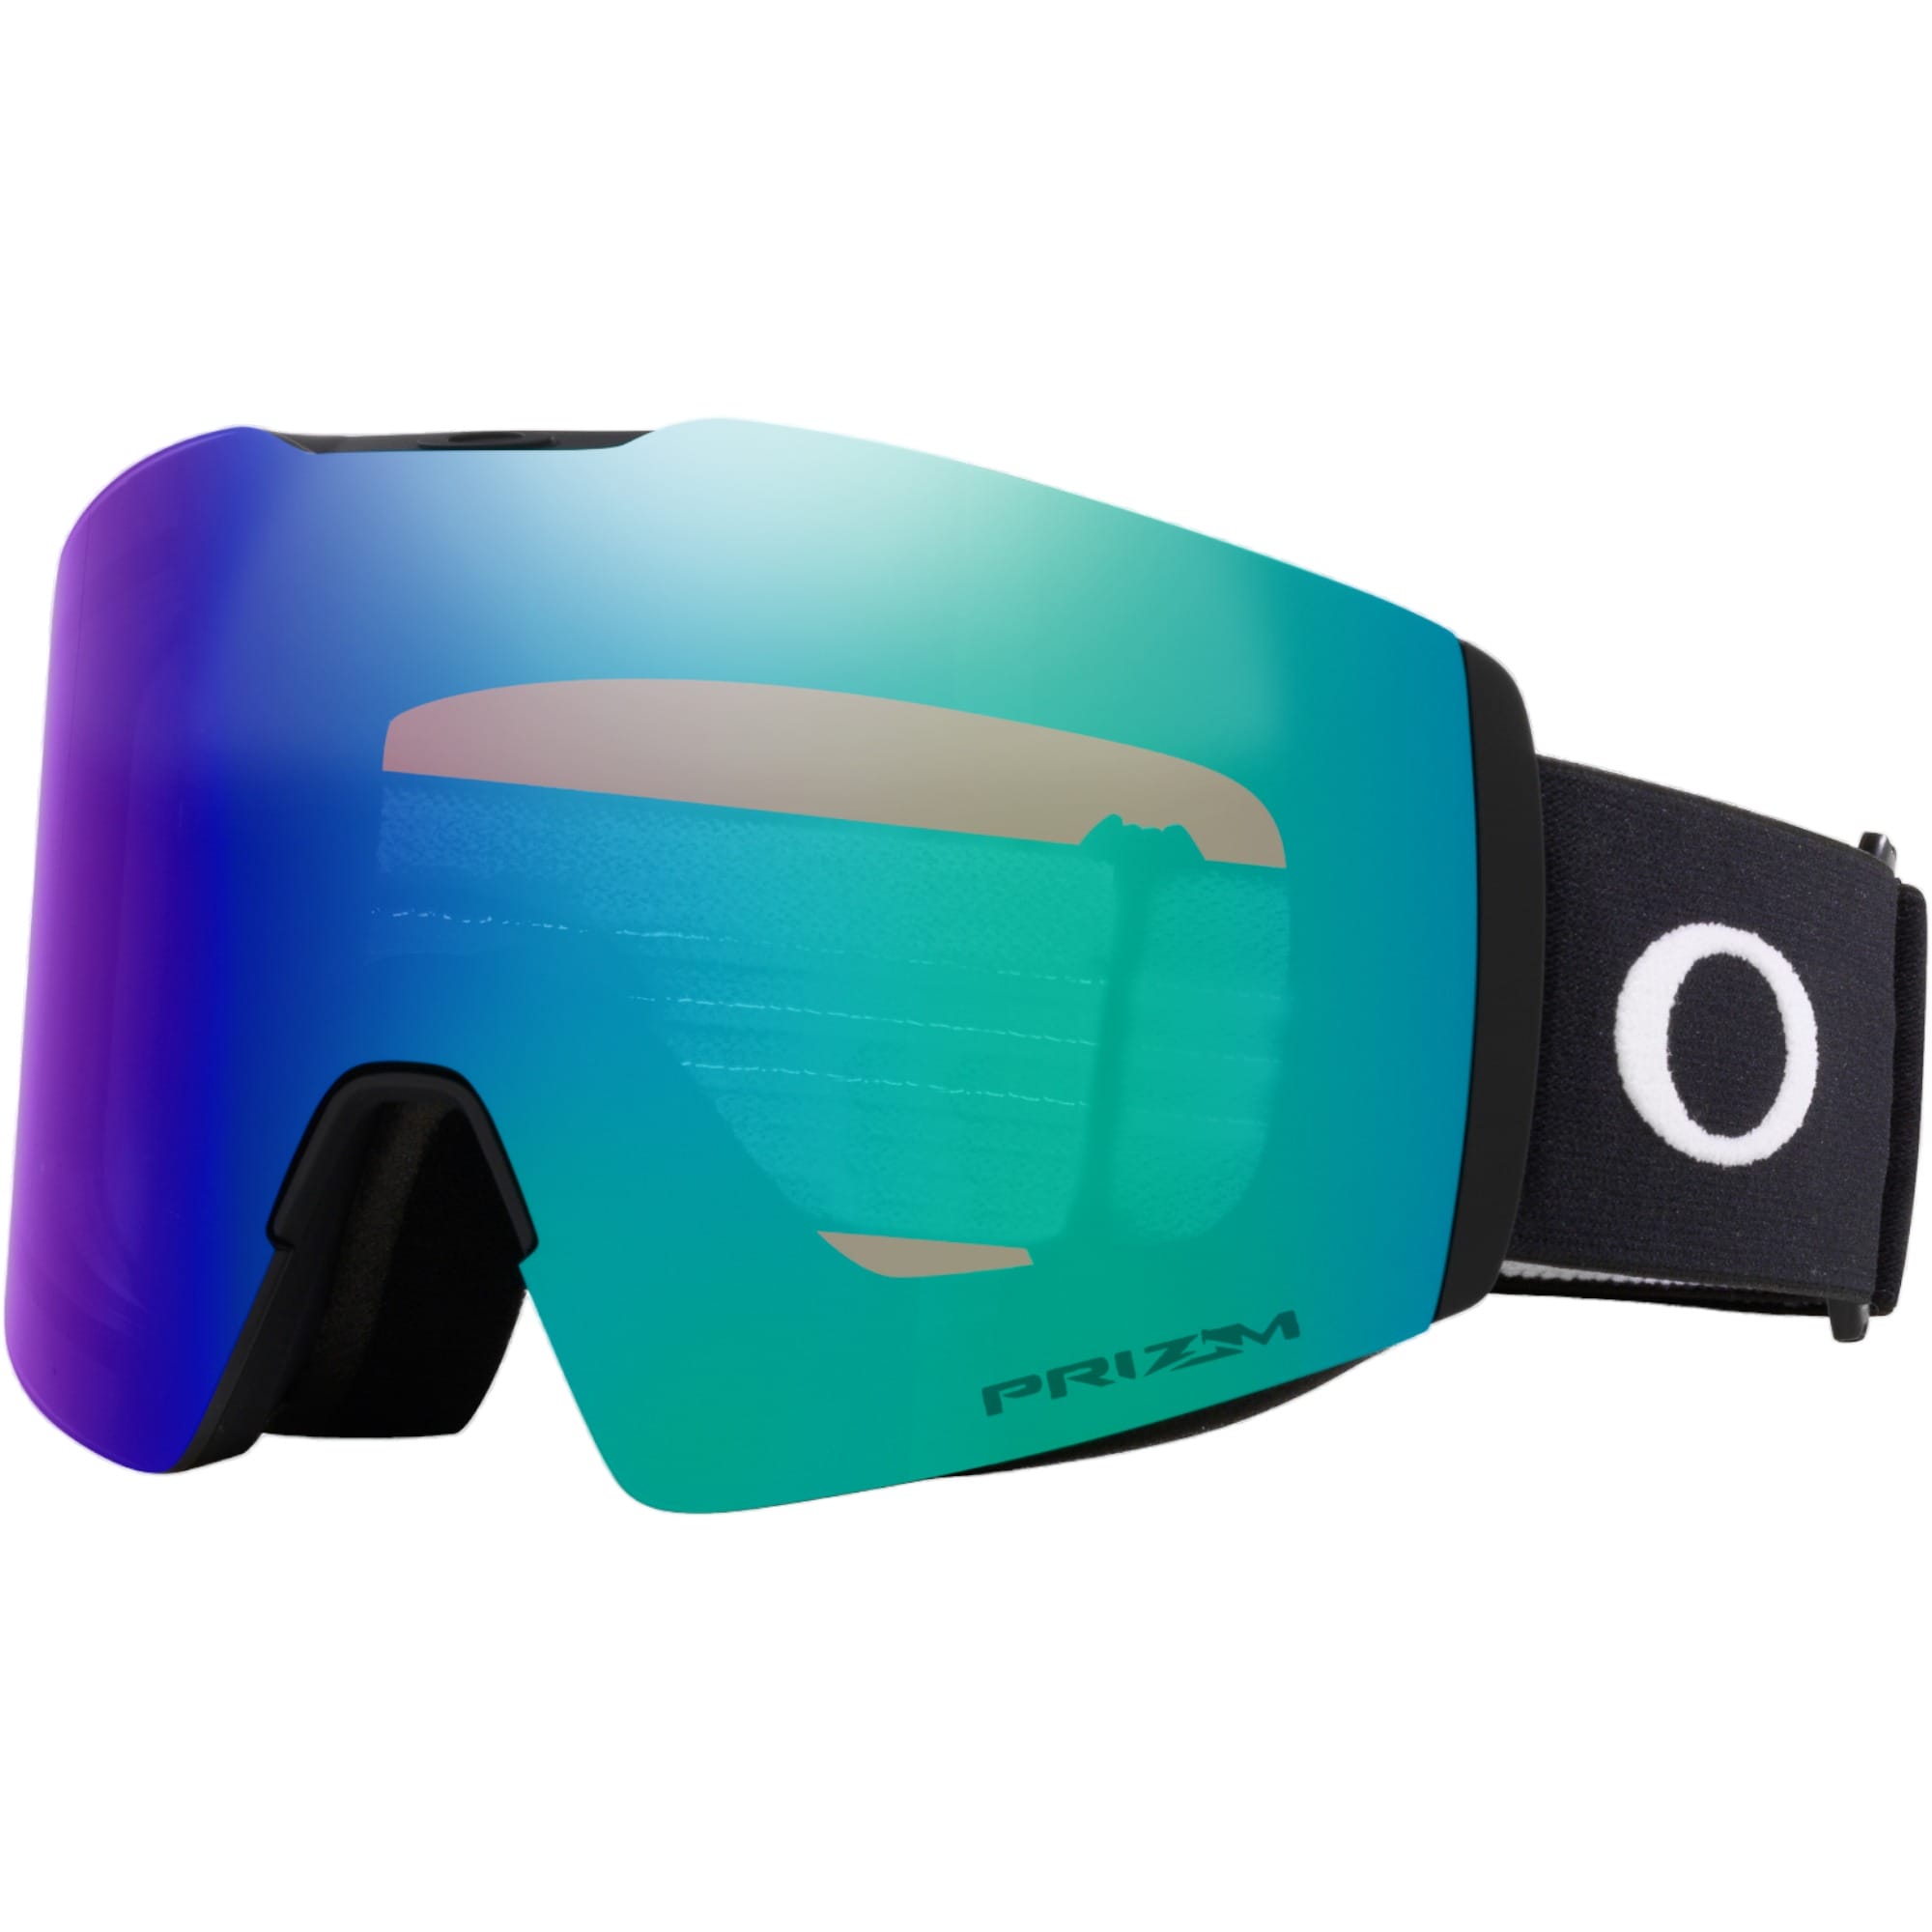 Oakley Fall Line L Factory Pilot Adult Ski Goggles – Oberson